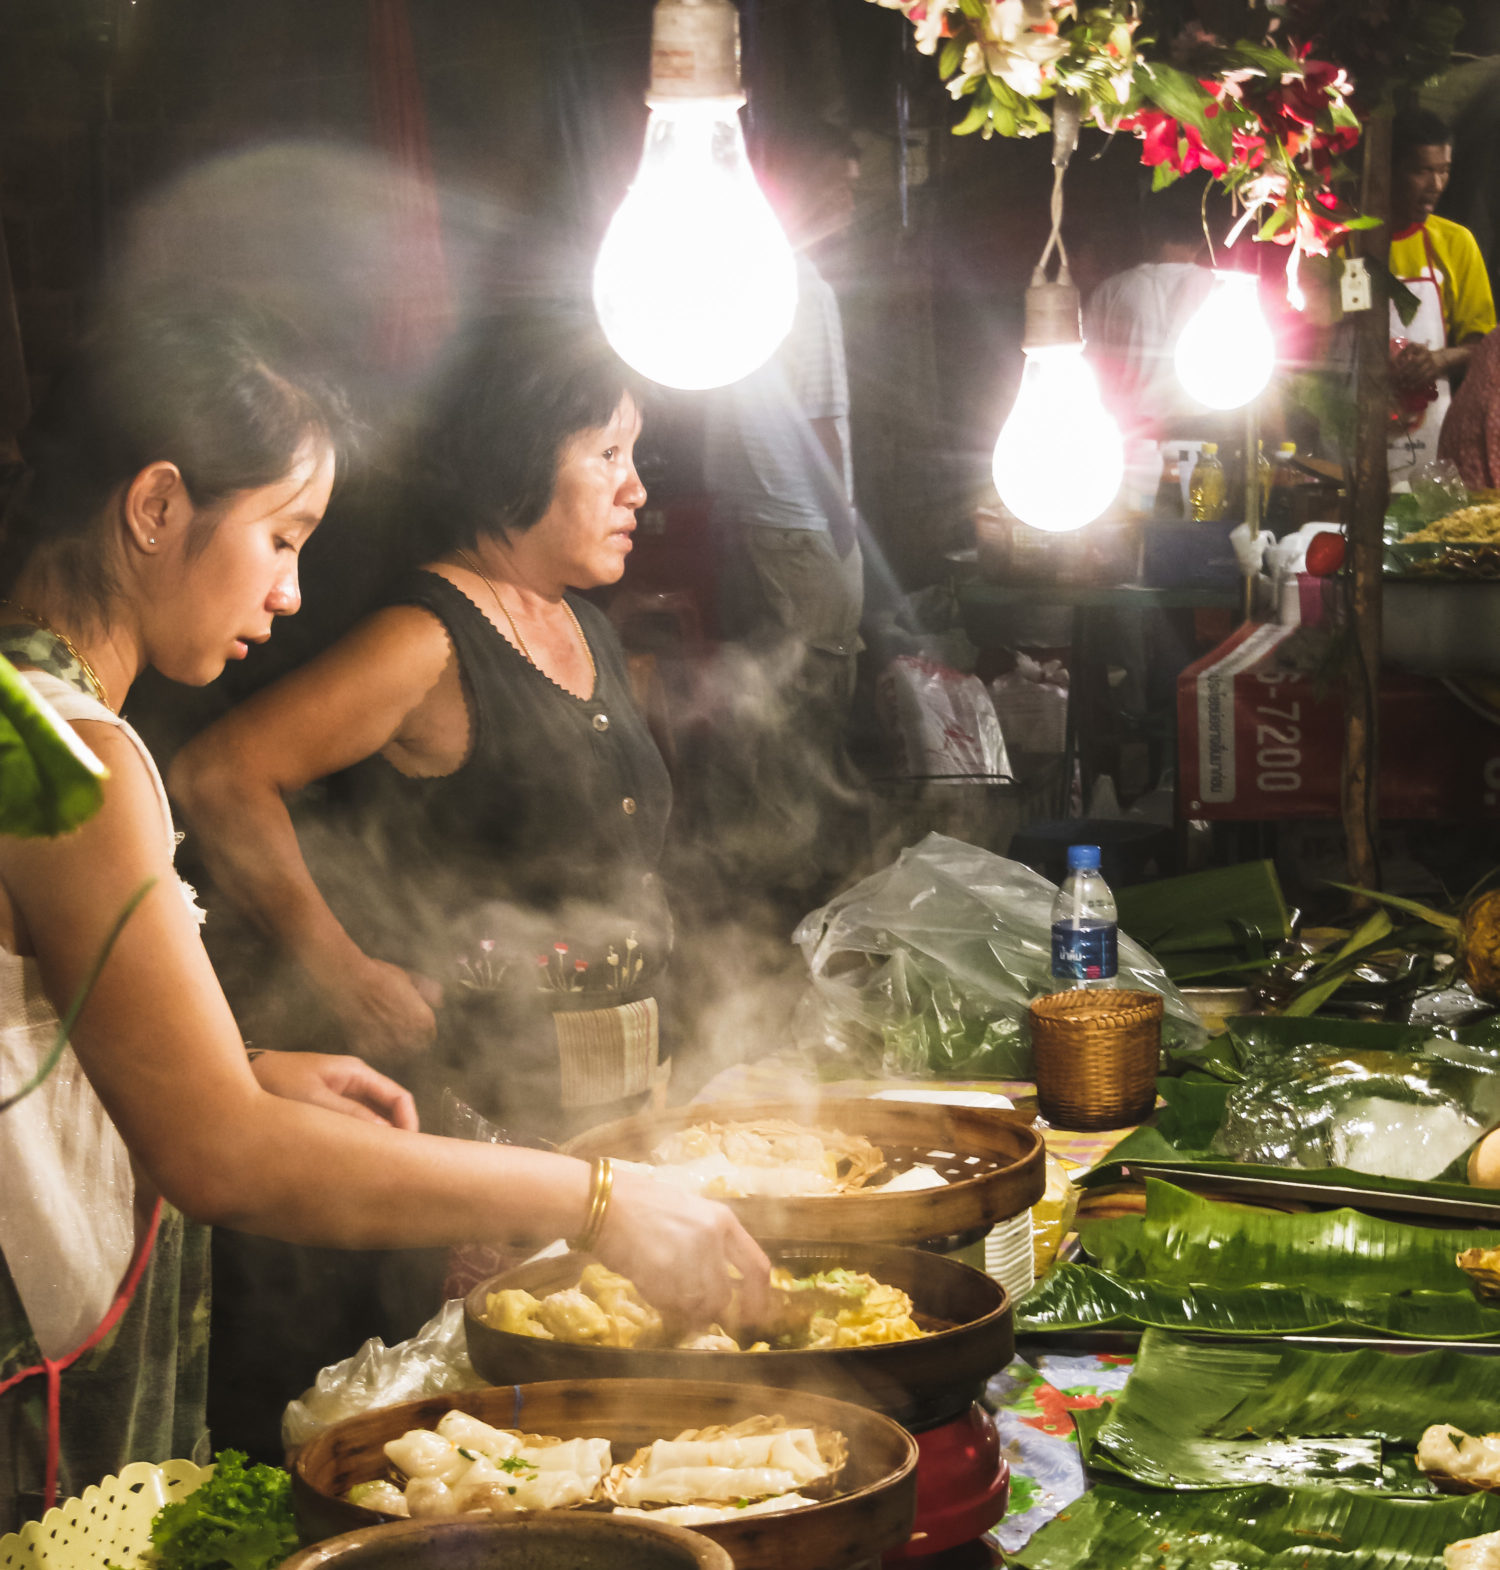 night market chiang mai